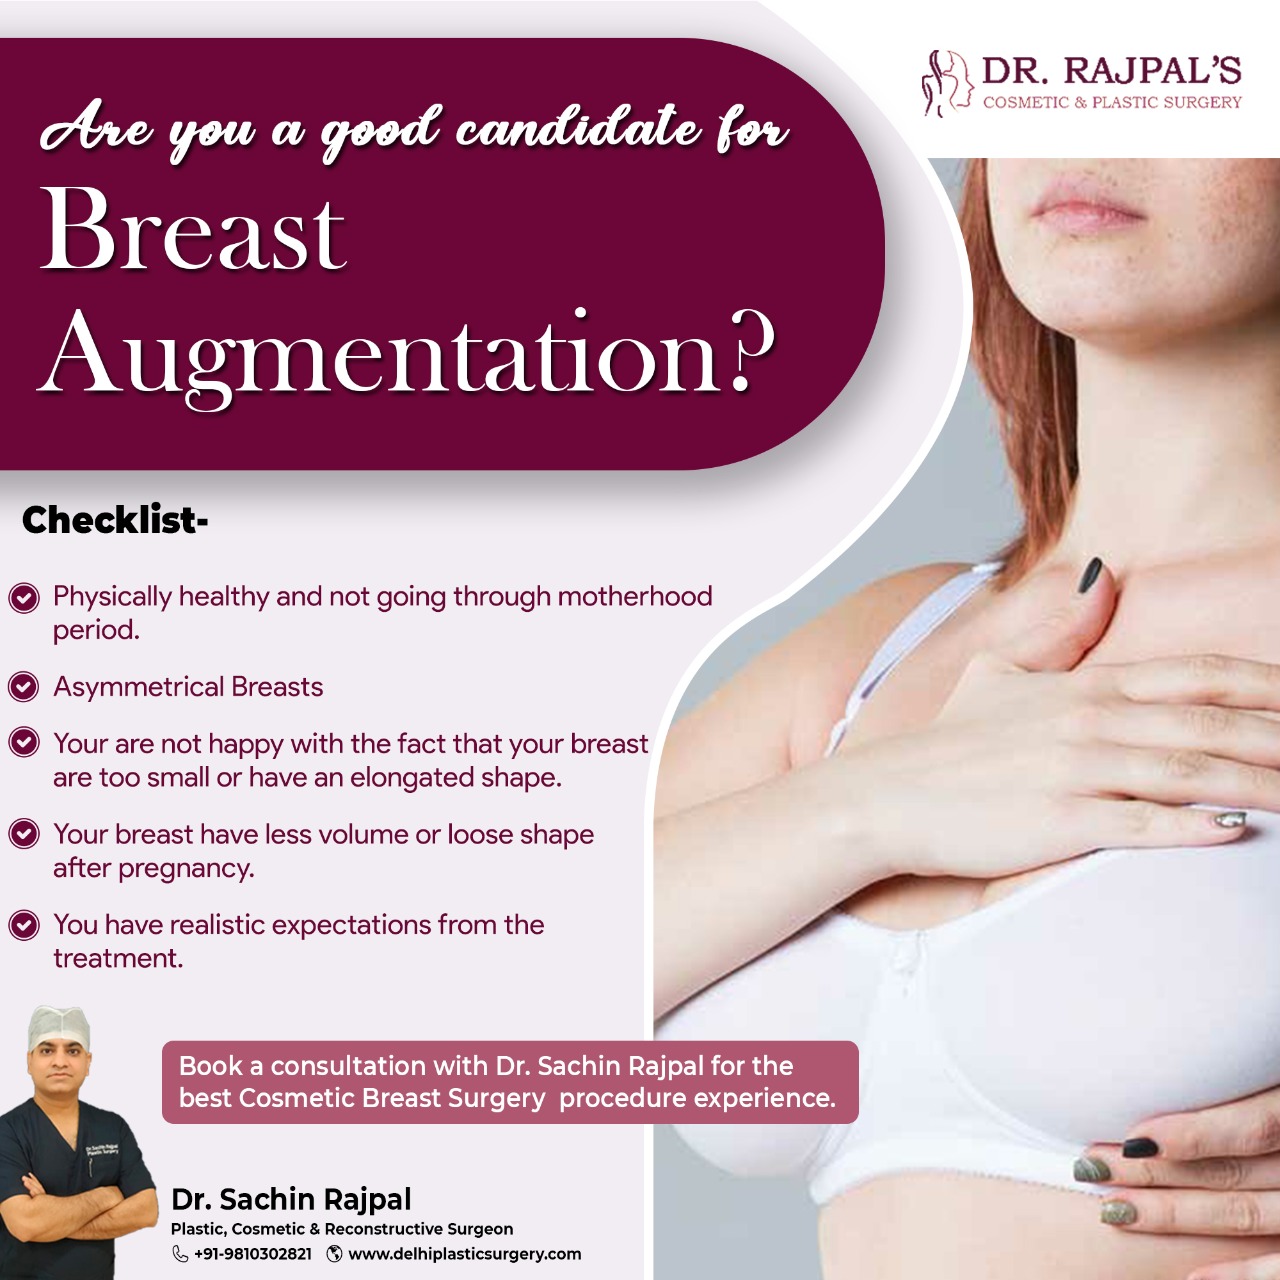 Breast Augmentation and Breast Reduction Surgery in Delhi – No scar, No  pain by Dr. Sachin Rajpal by abdominoplastyindelhi - Issuu